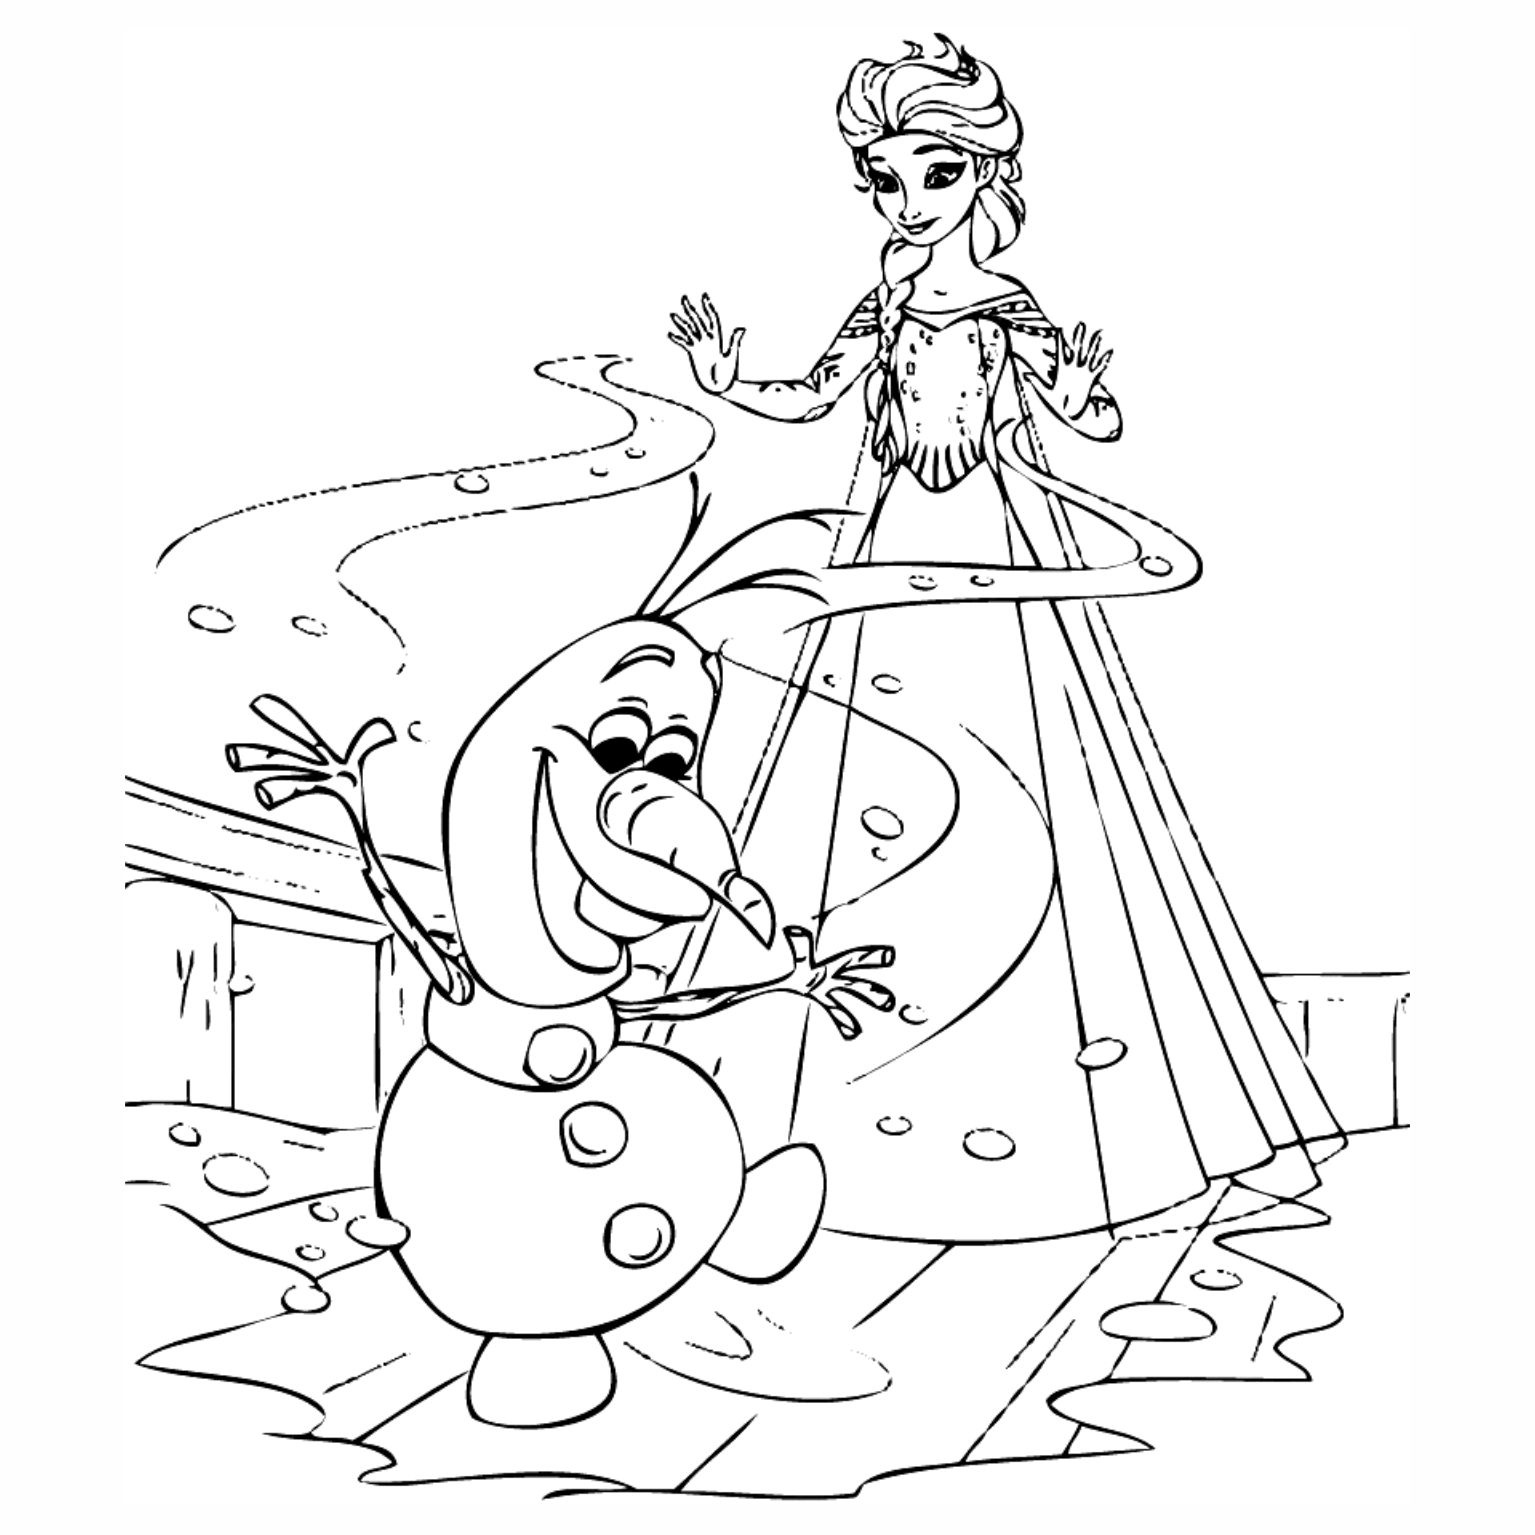 Como desenhar e pintar Olaf do filme Frozen da Disney 